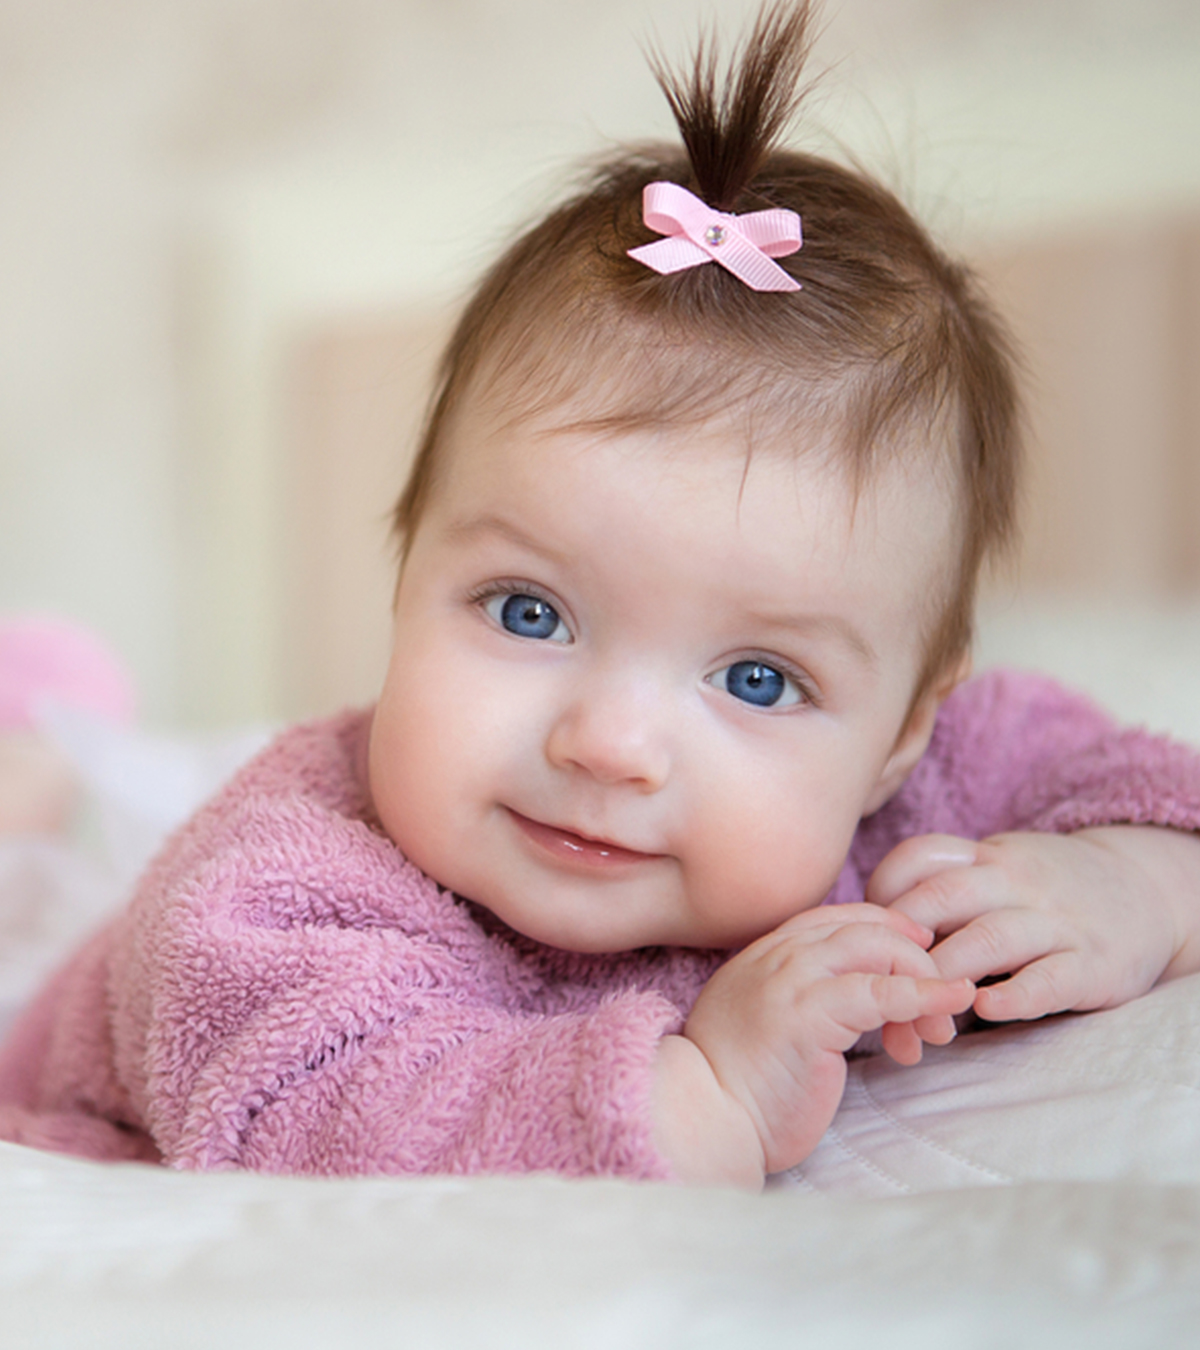 100 Very Feminine And Girly Names For Baby Girls - MomJunction